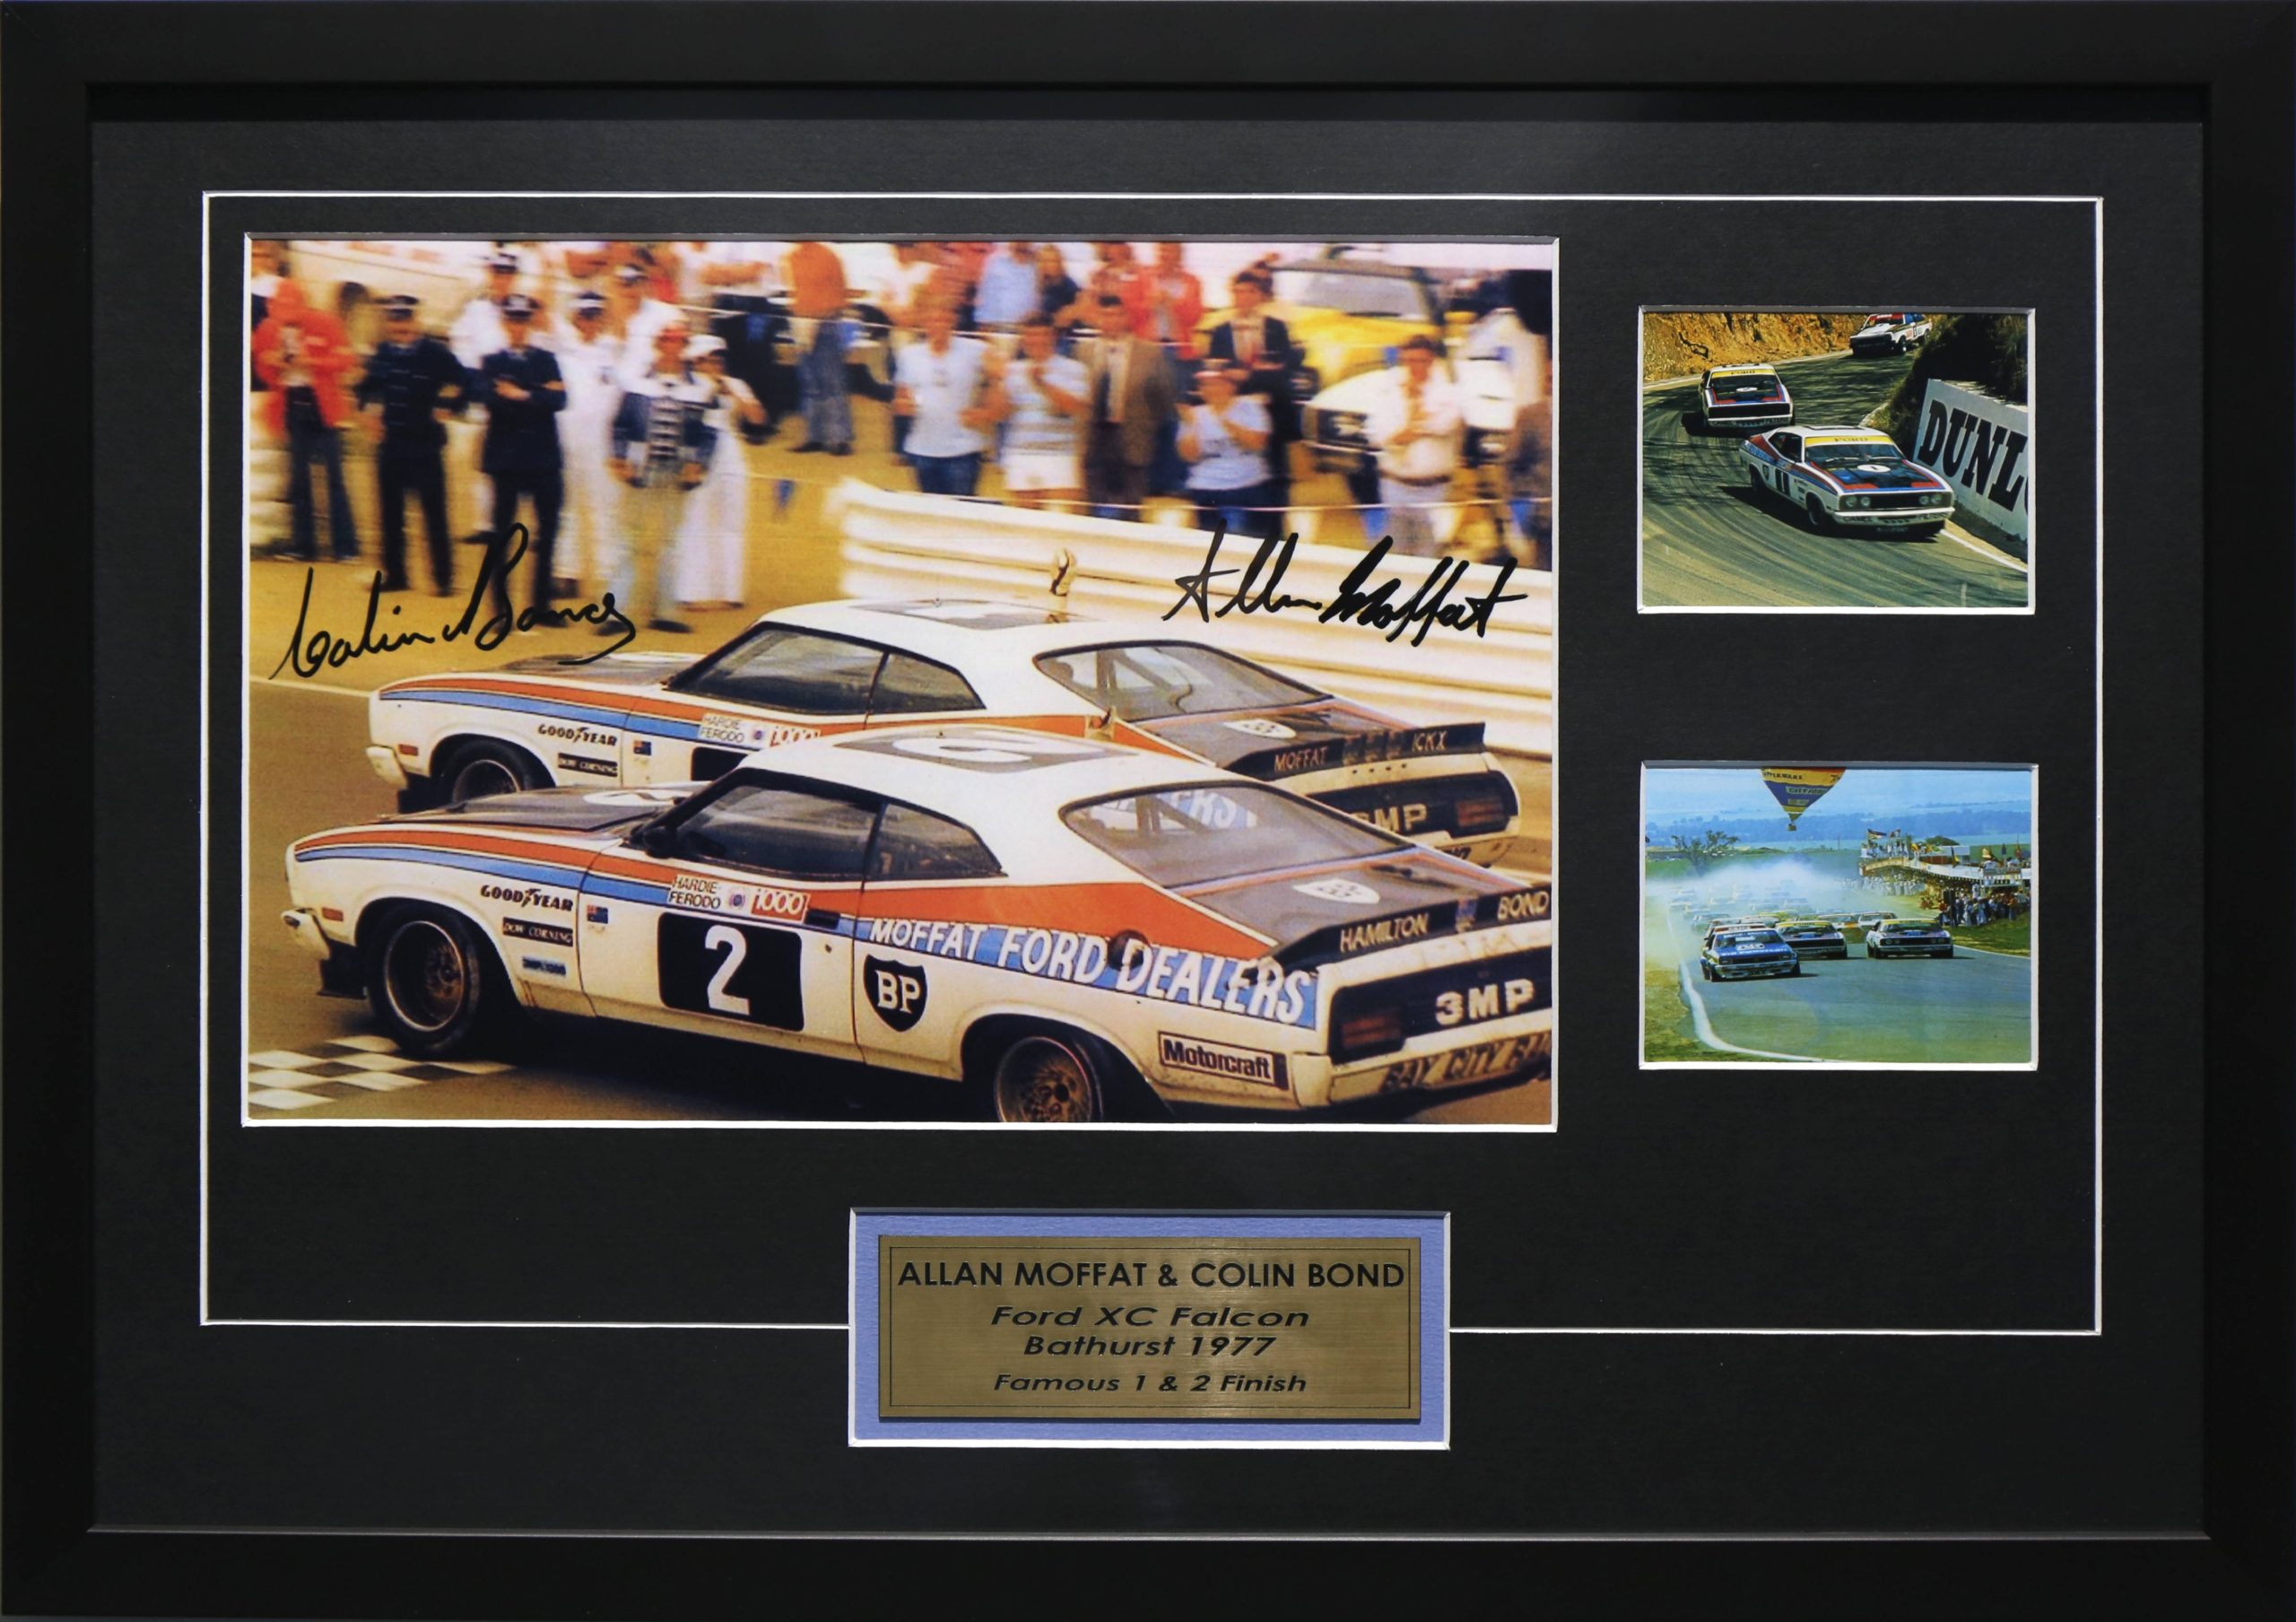 Allan Moffat & Colin Bond Signed & Framed Motor Racing Memorabilia. Bathurst 1977 Ford XC Falcon 1-2 Finish Winners.